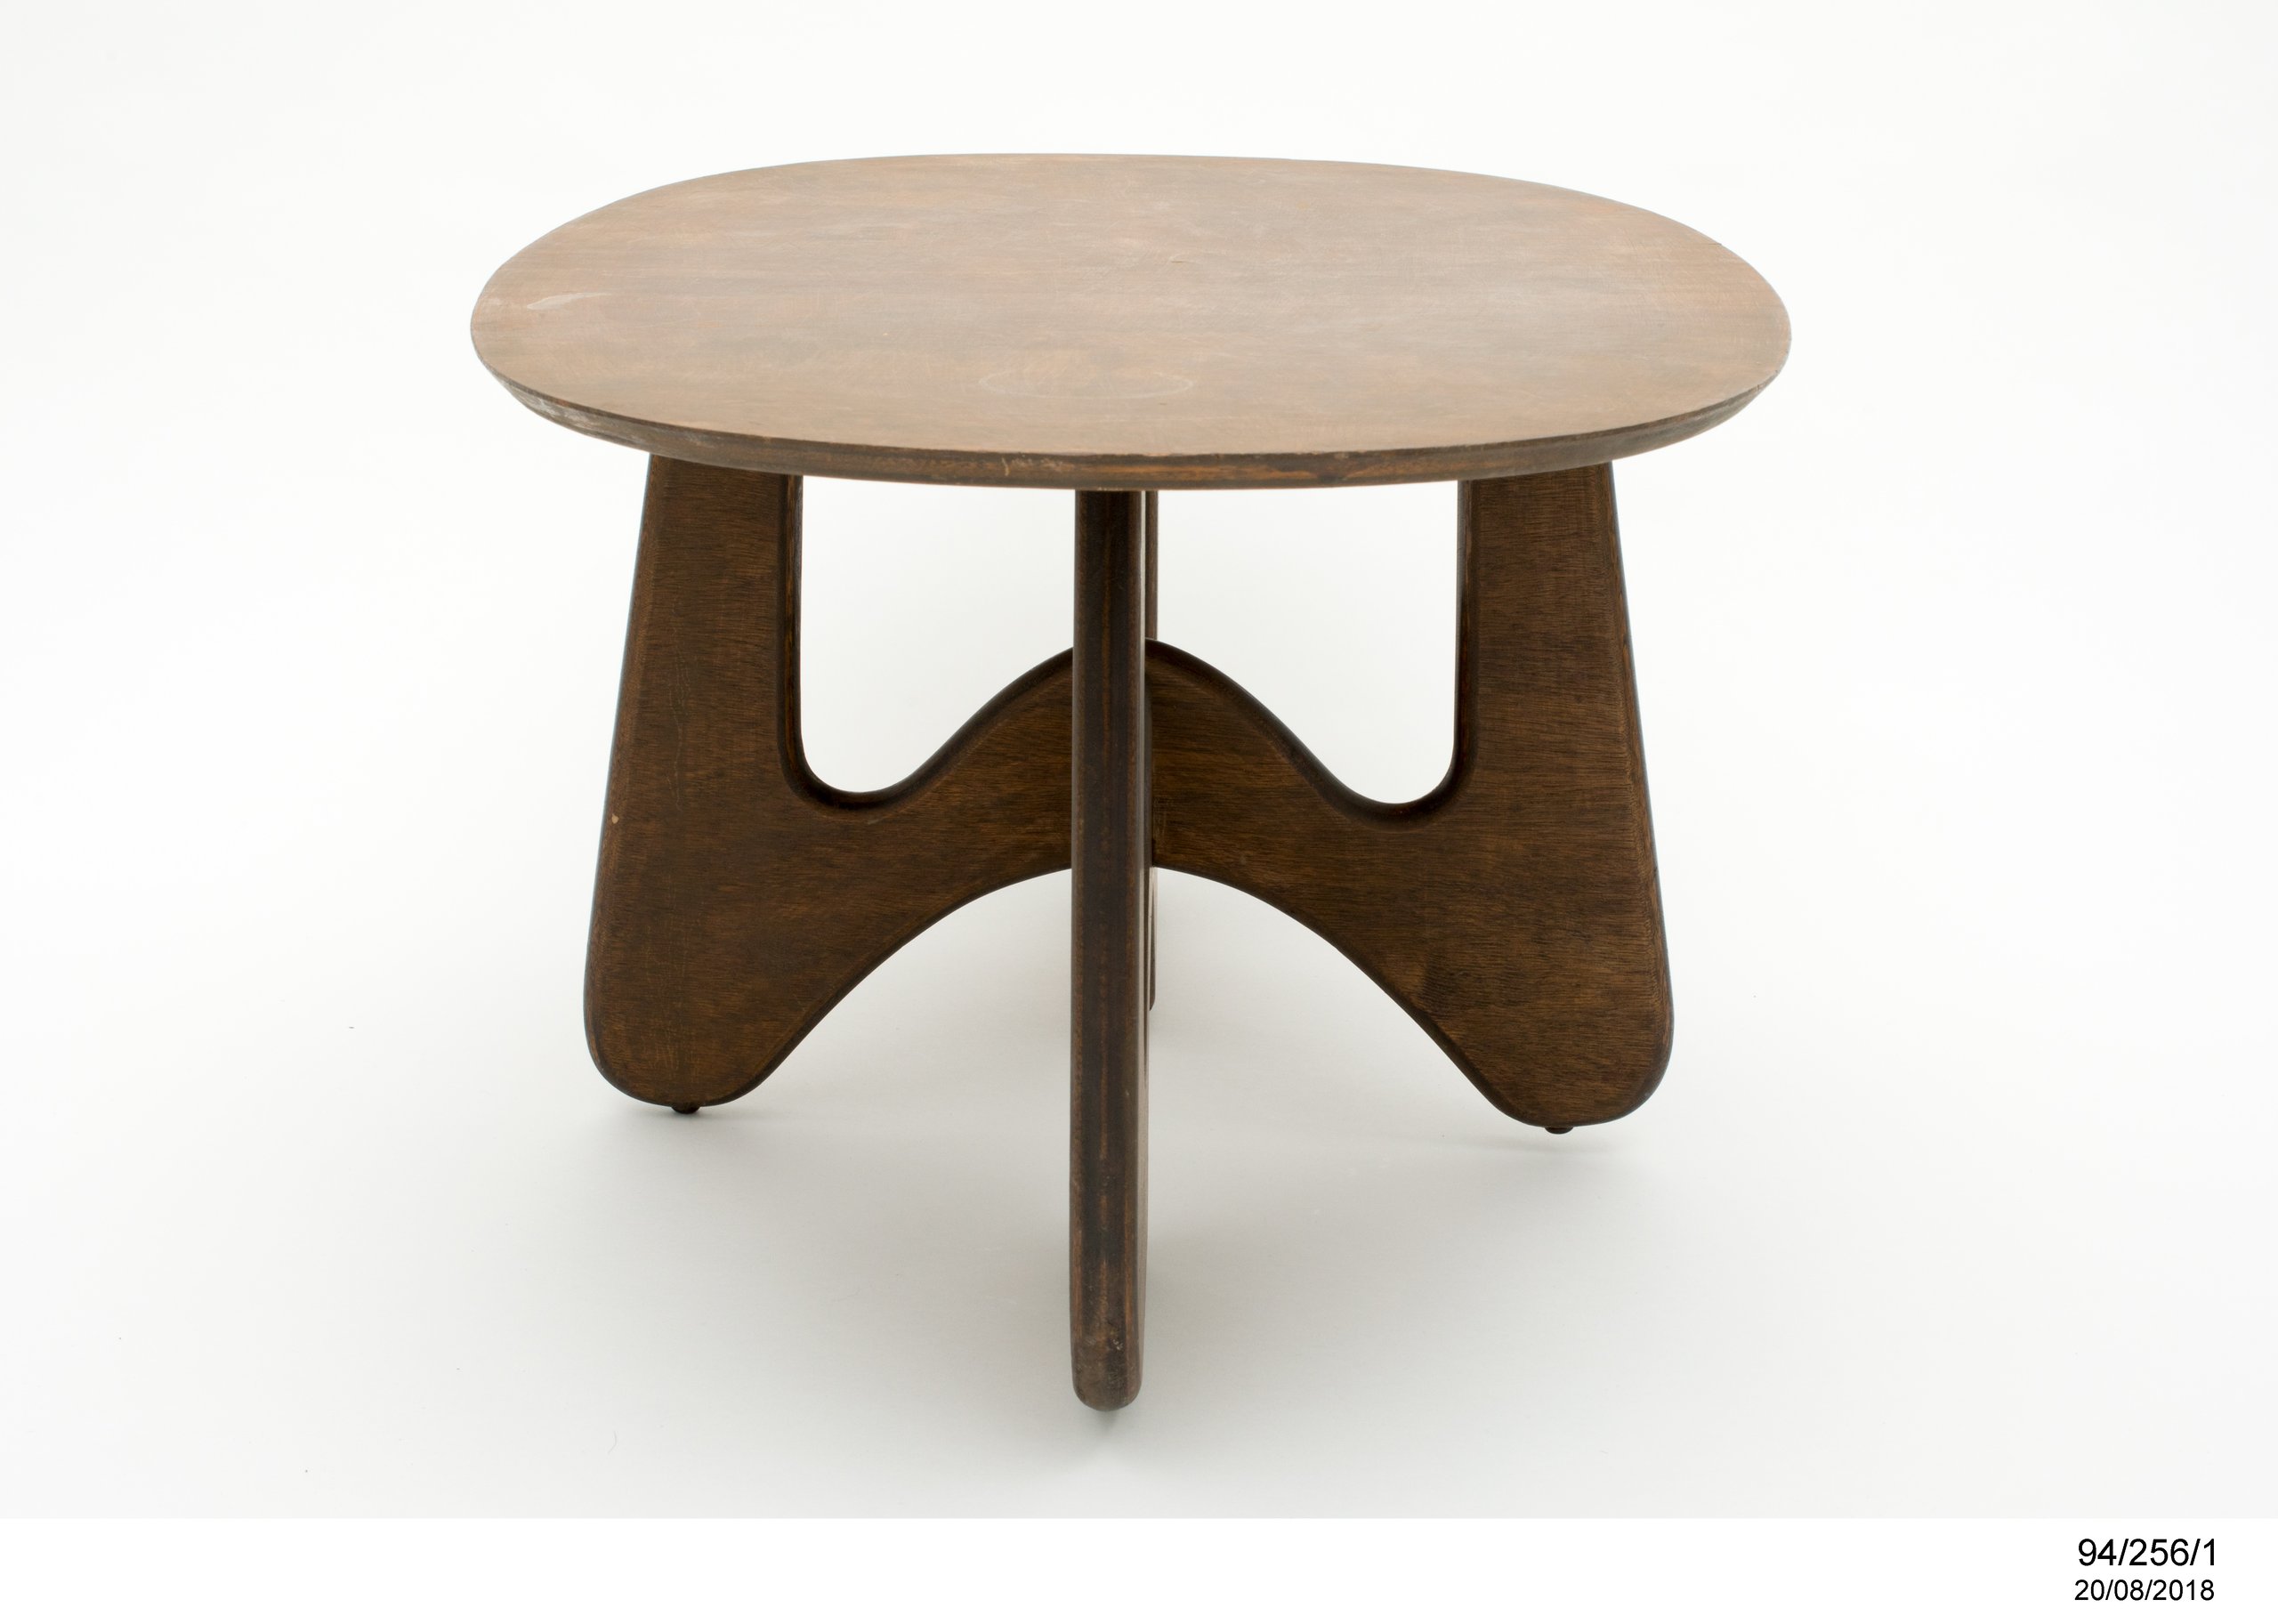 Prototype coffee table by Robert Klippel